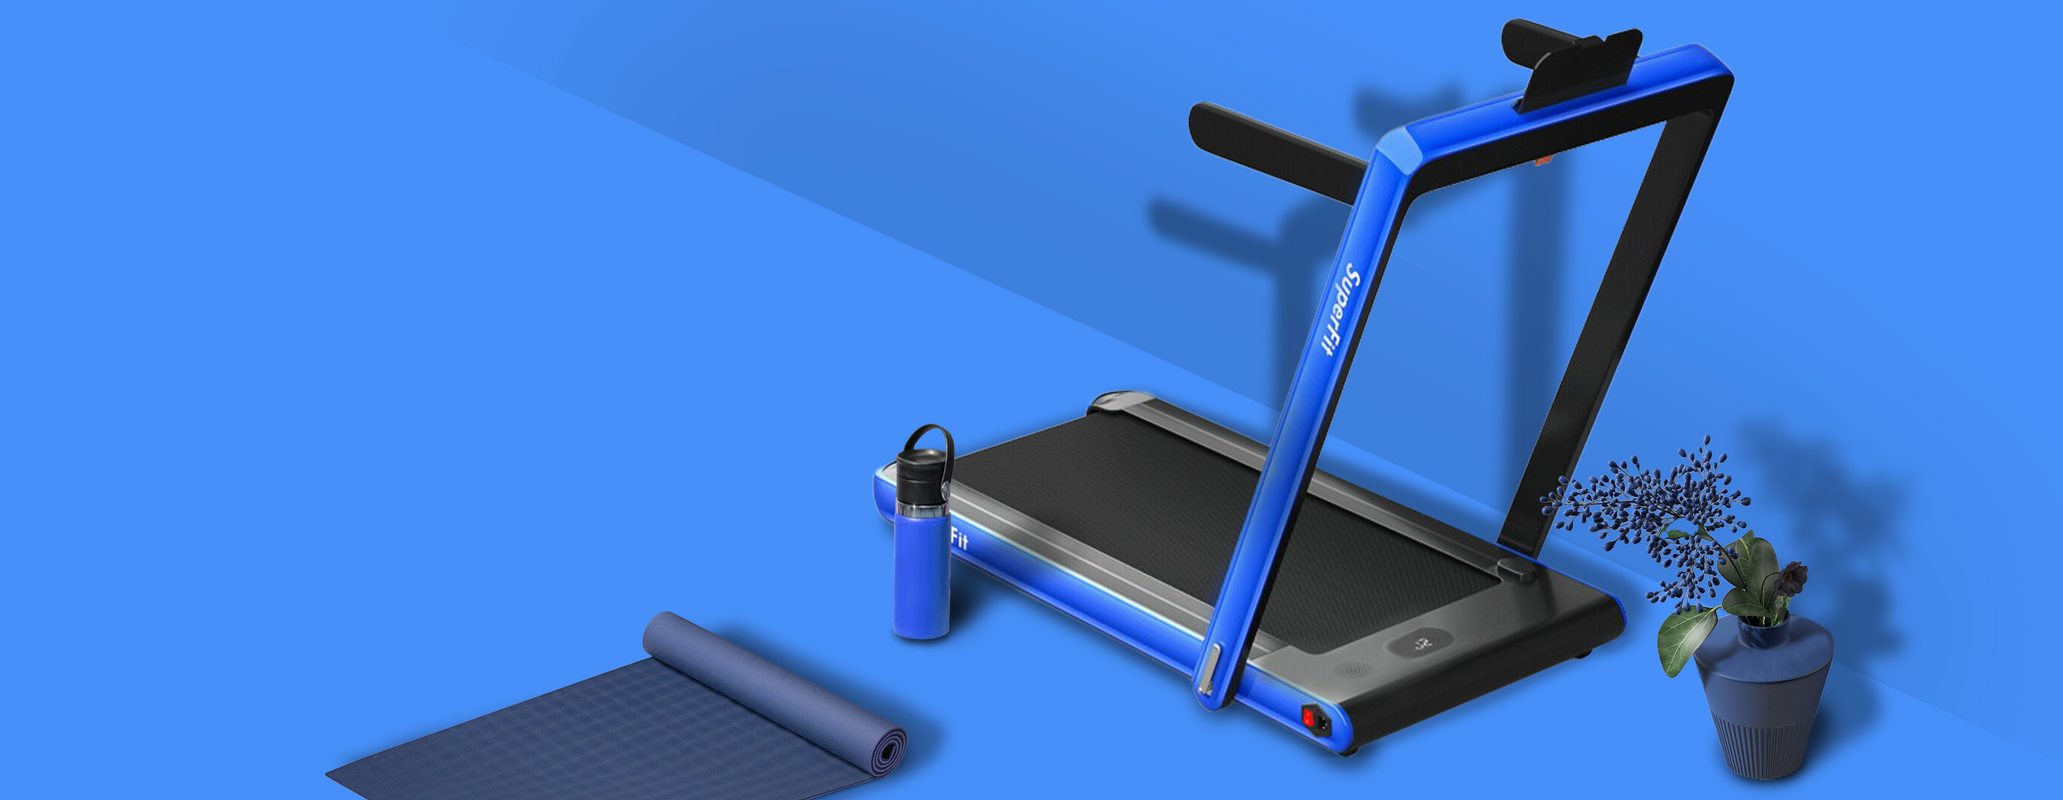 Folding Treadmill with Bluetooth speaker 